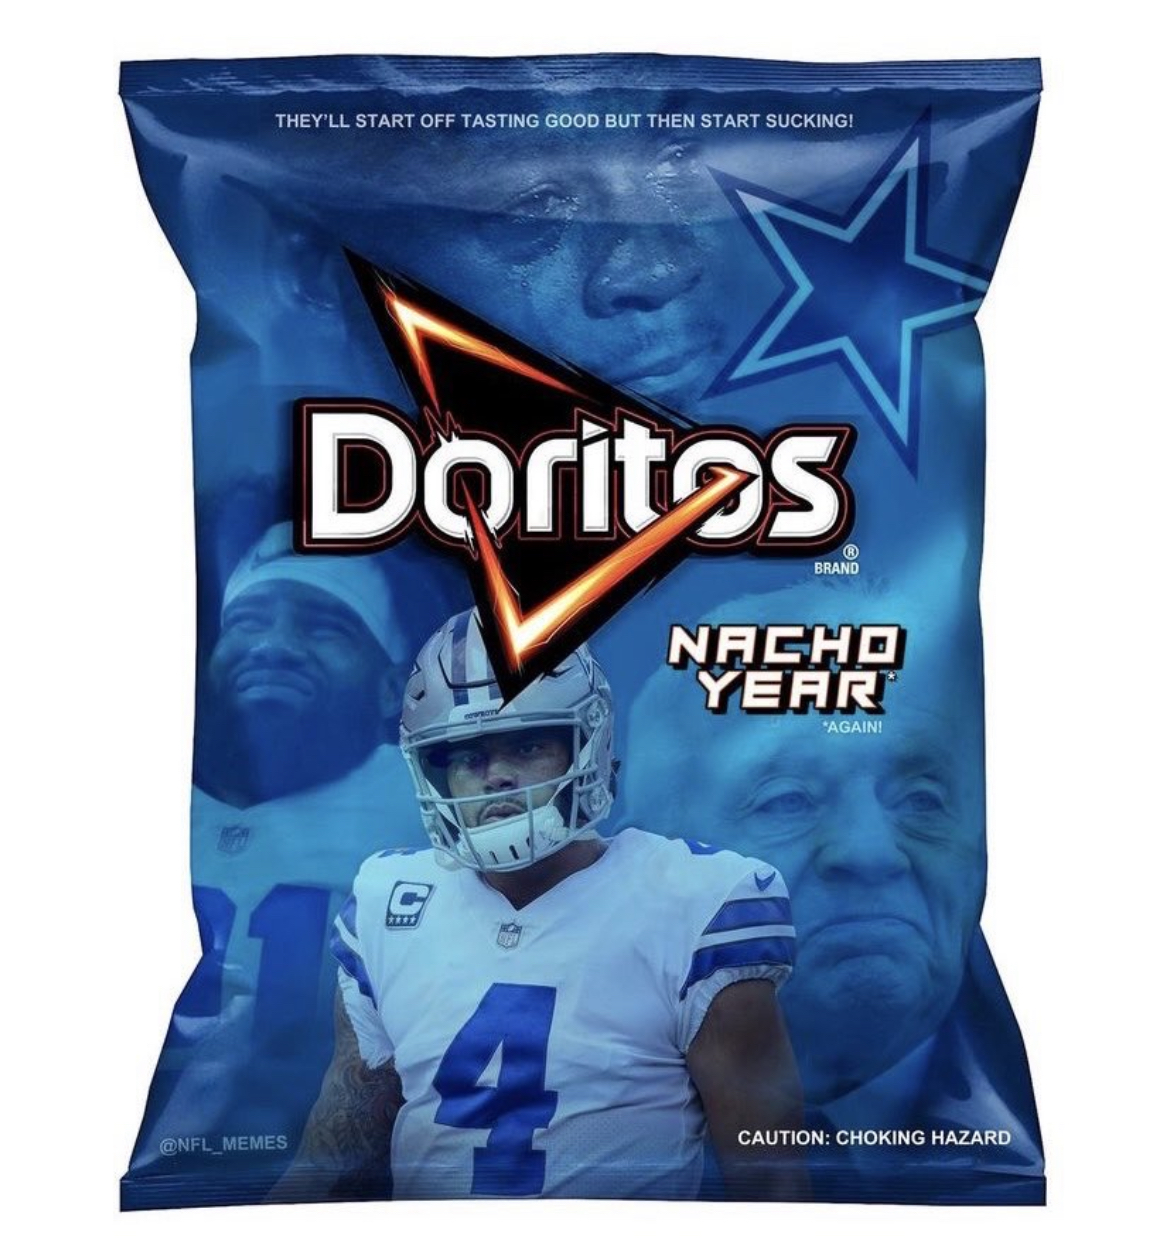 NFL memes week 1 2022 - cowboys doritos nacho year - They'Ll Start Off Tasting Good But Then Start Sucking! Enpl Memes Doritos band And Nacho Year Again Caution Choking Hazard